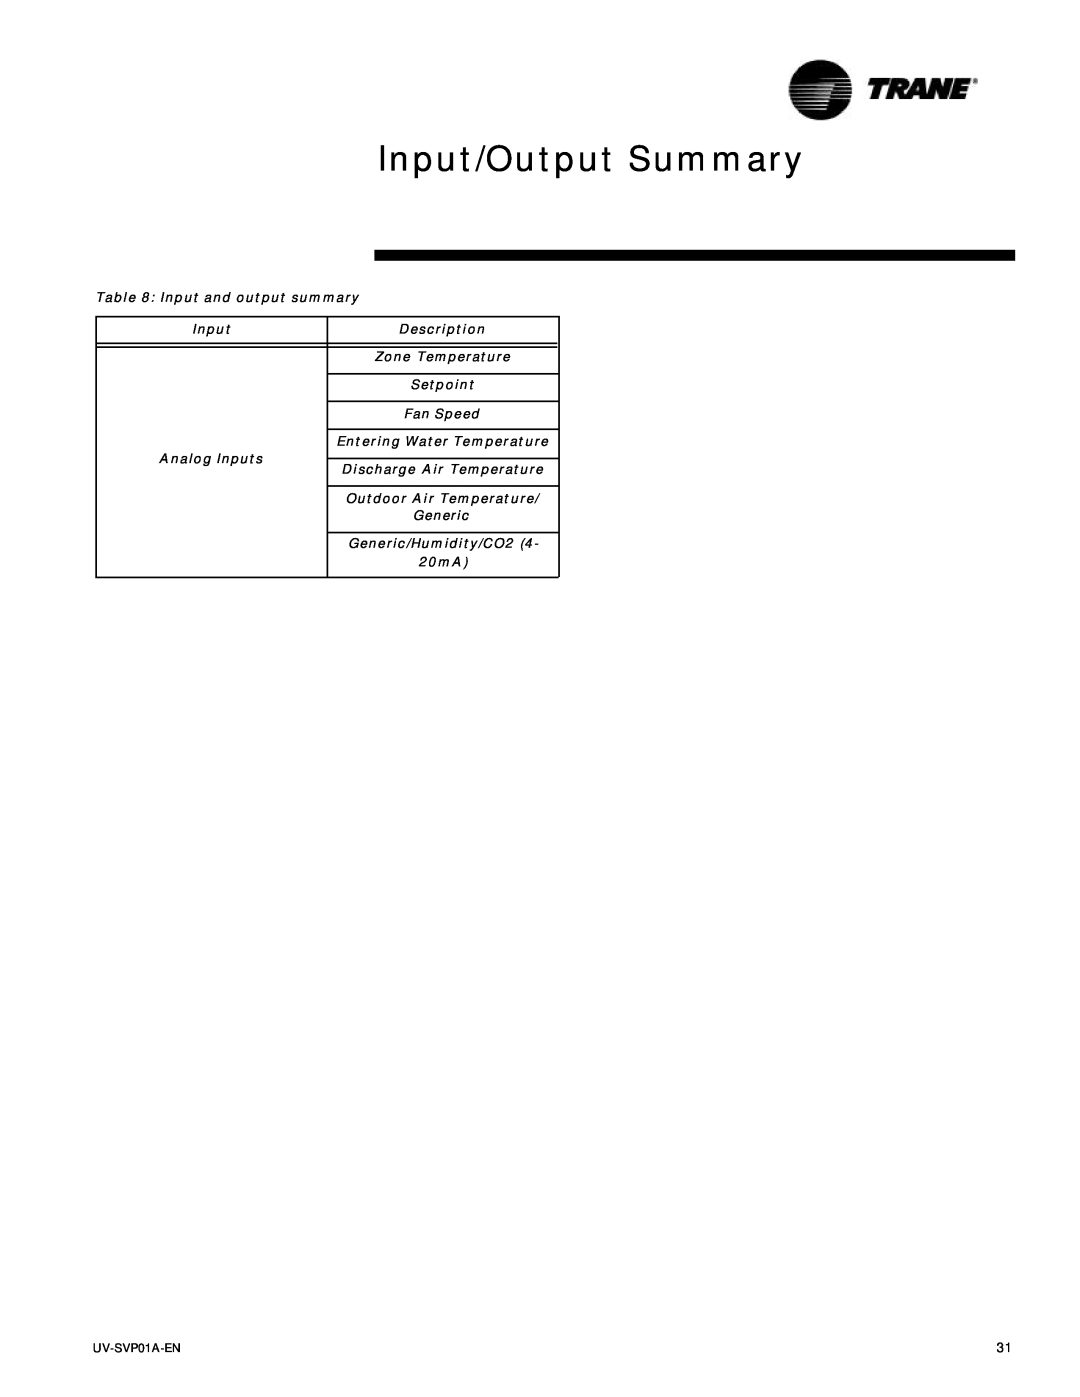 Trane ZN.520 Input/Output Summary, Input and output summary, Description, Generic Generic/Humidity/CO2 20mA, UV-SVP01A-EN 